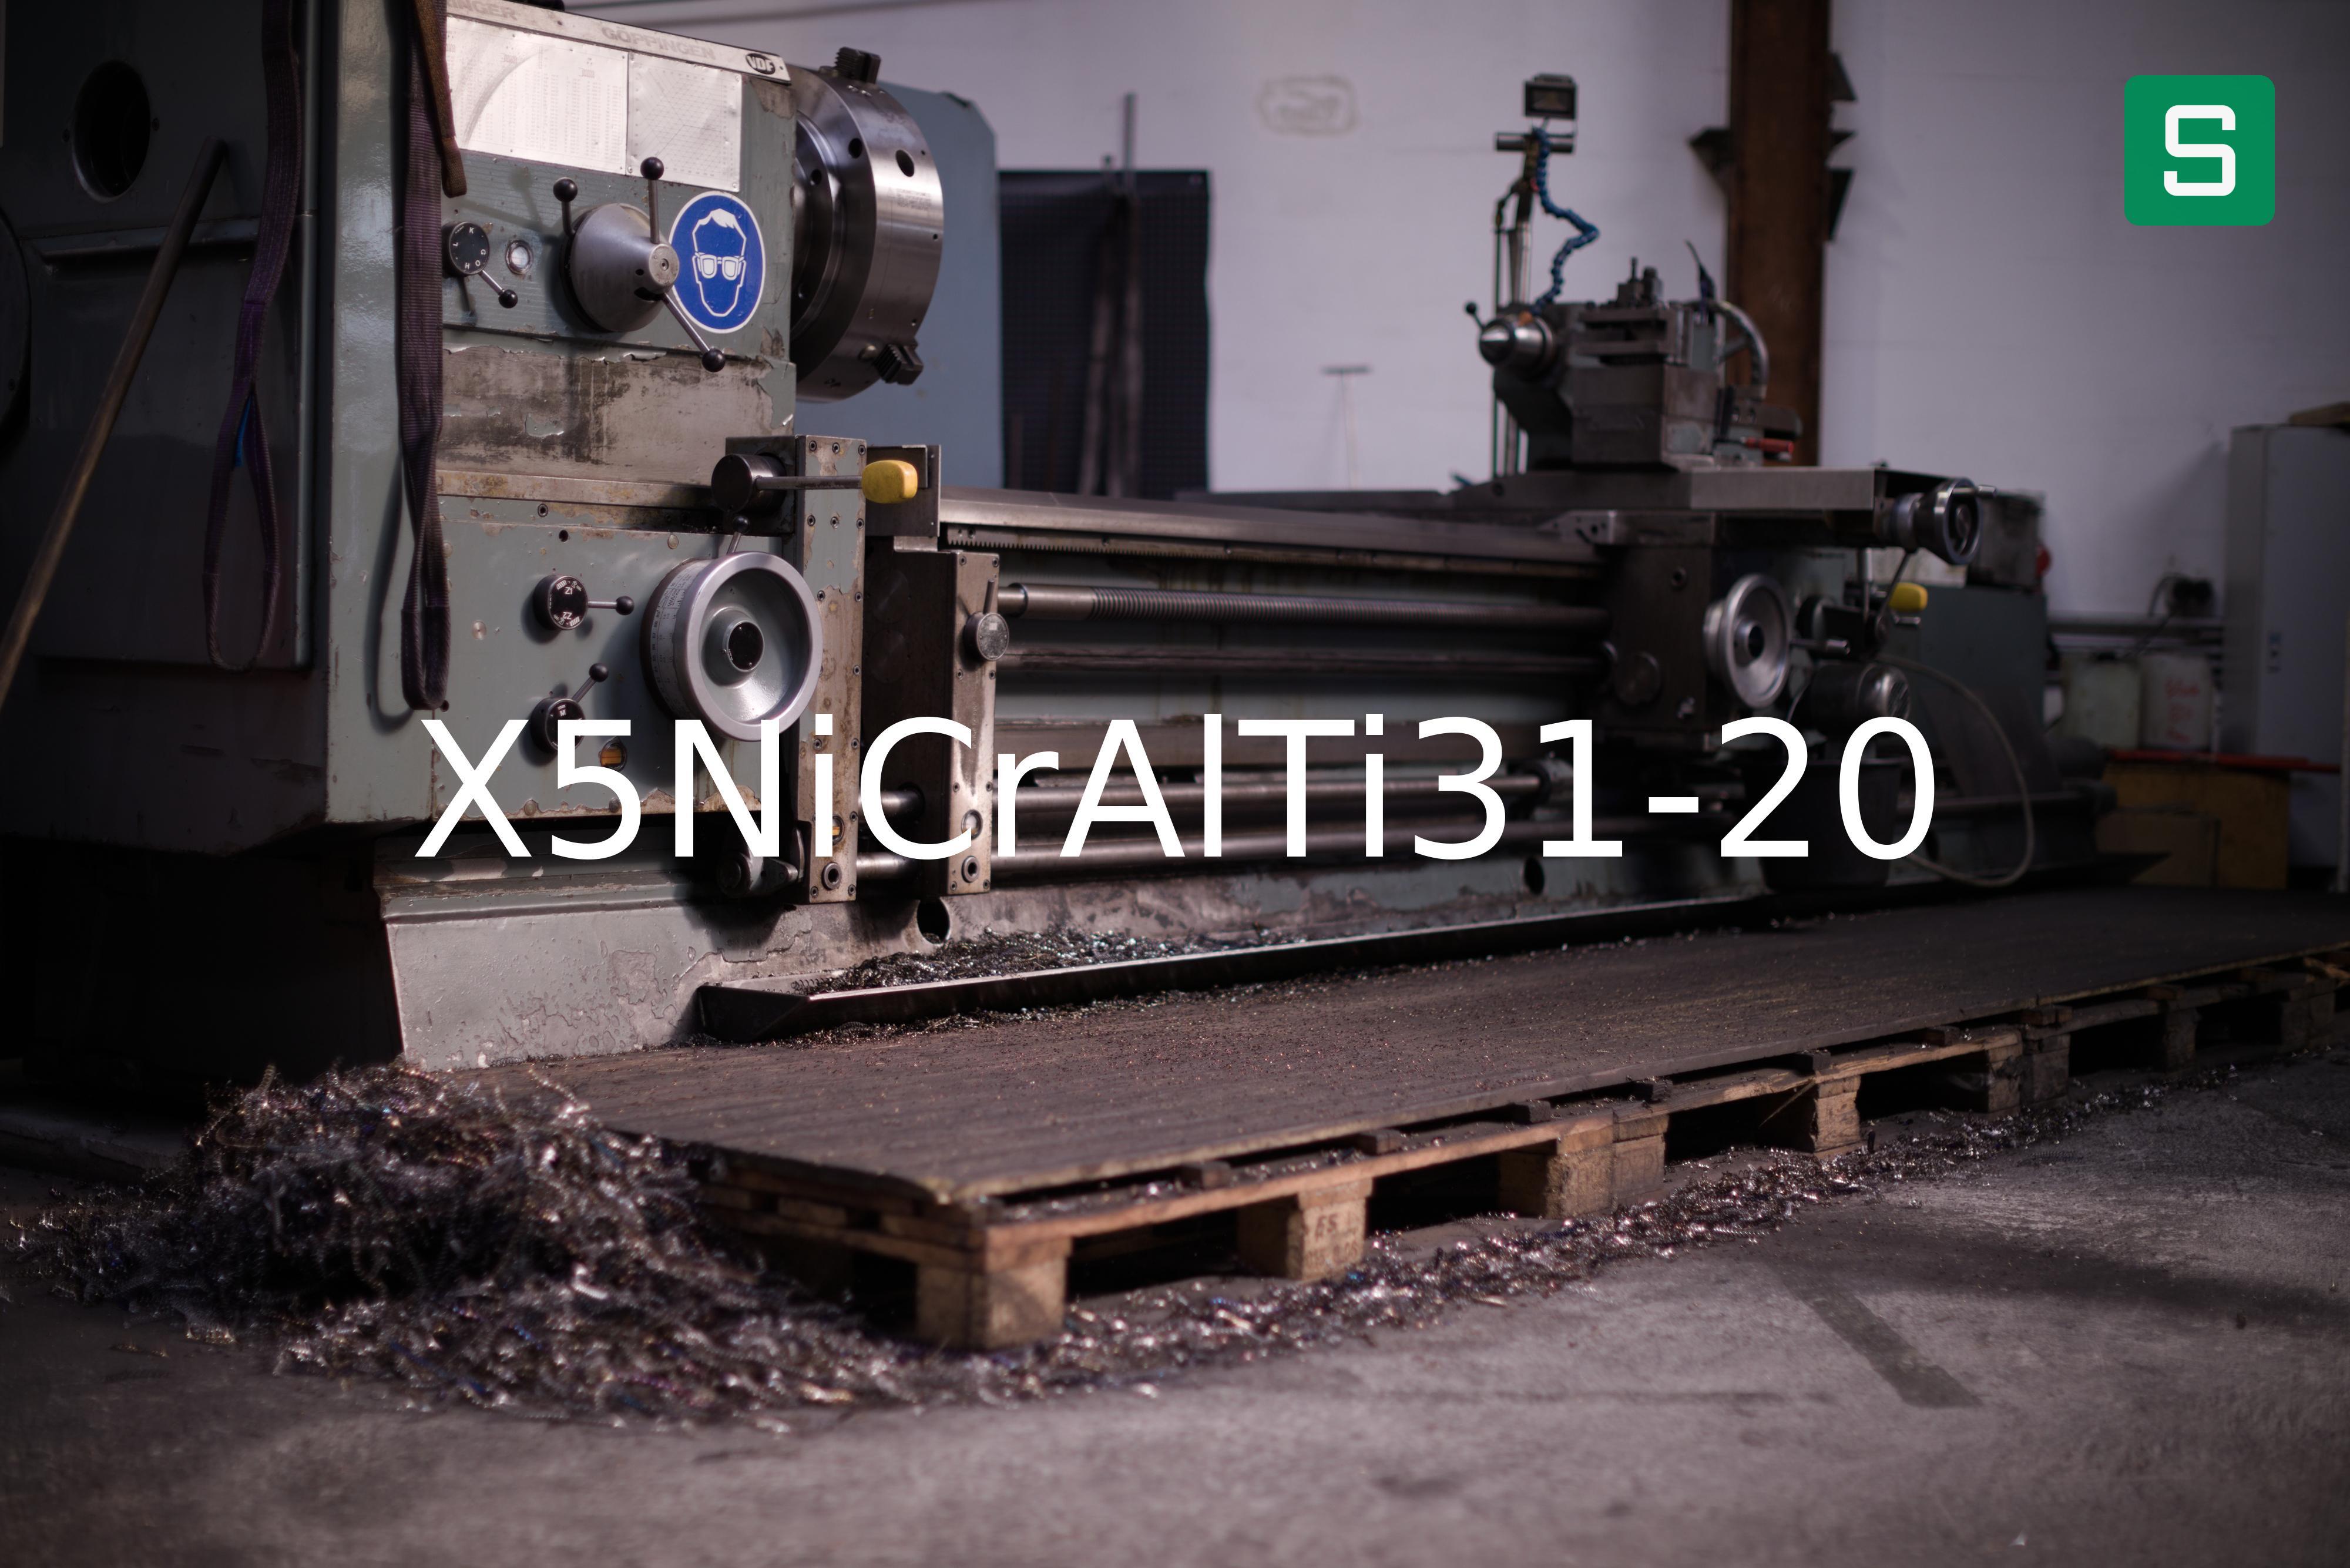 Material de Acero: X5NiCrAlTi31-20